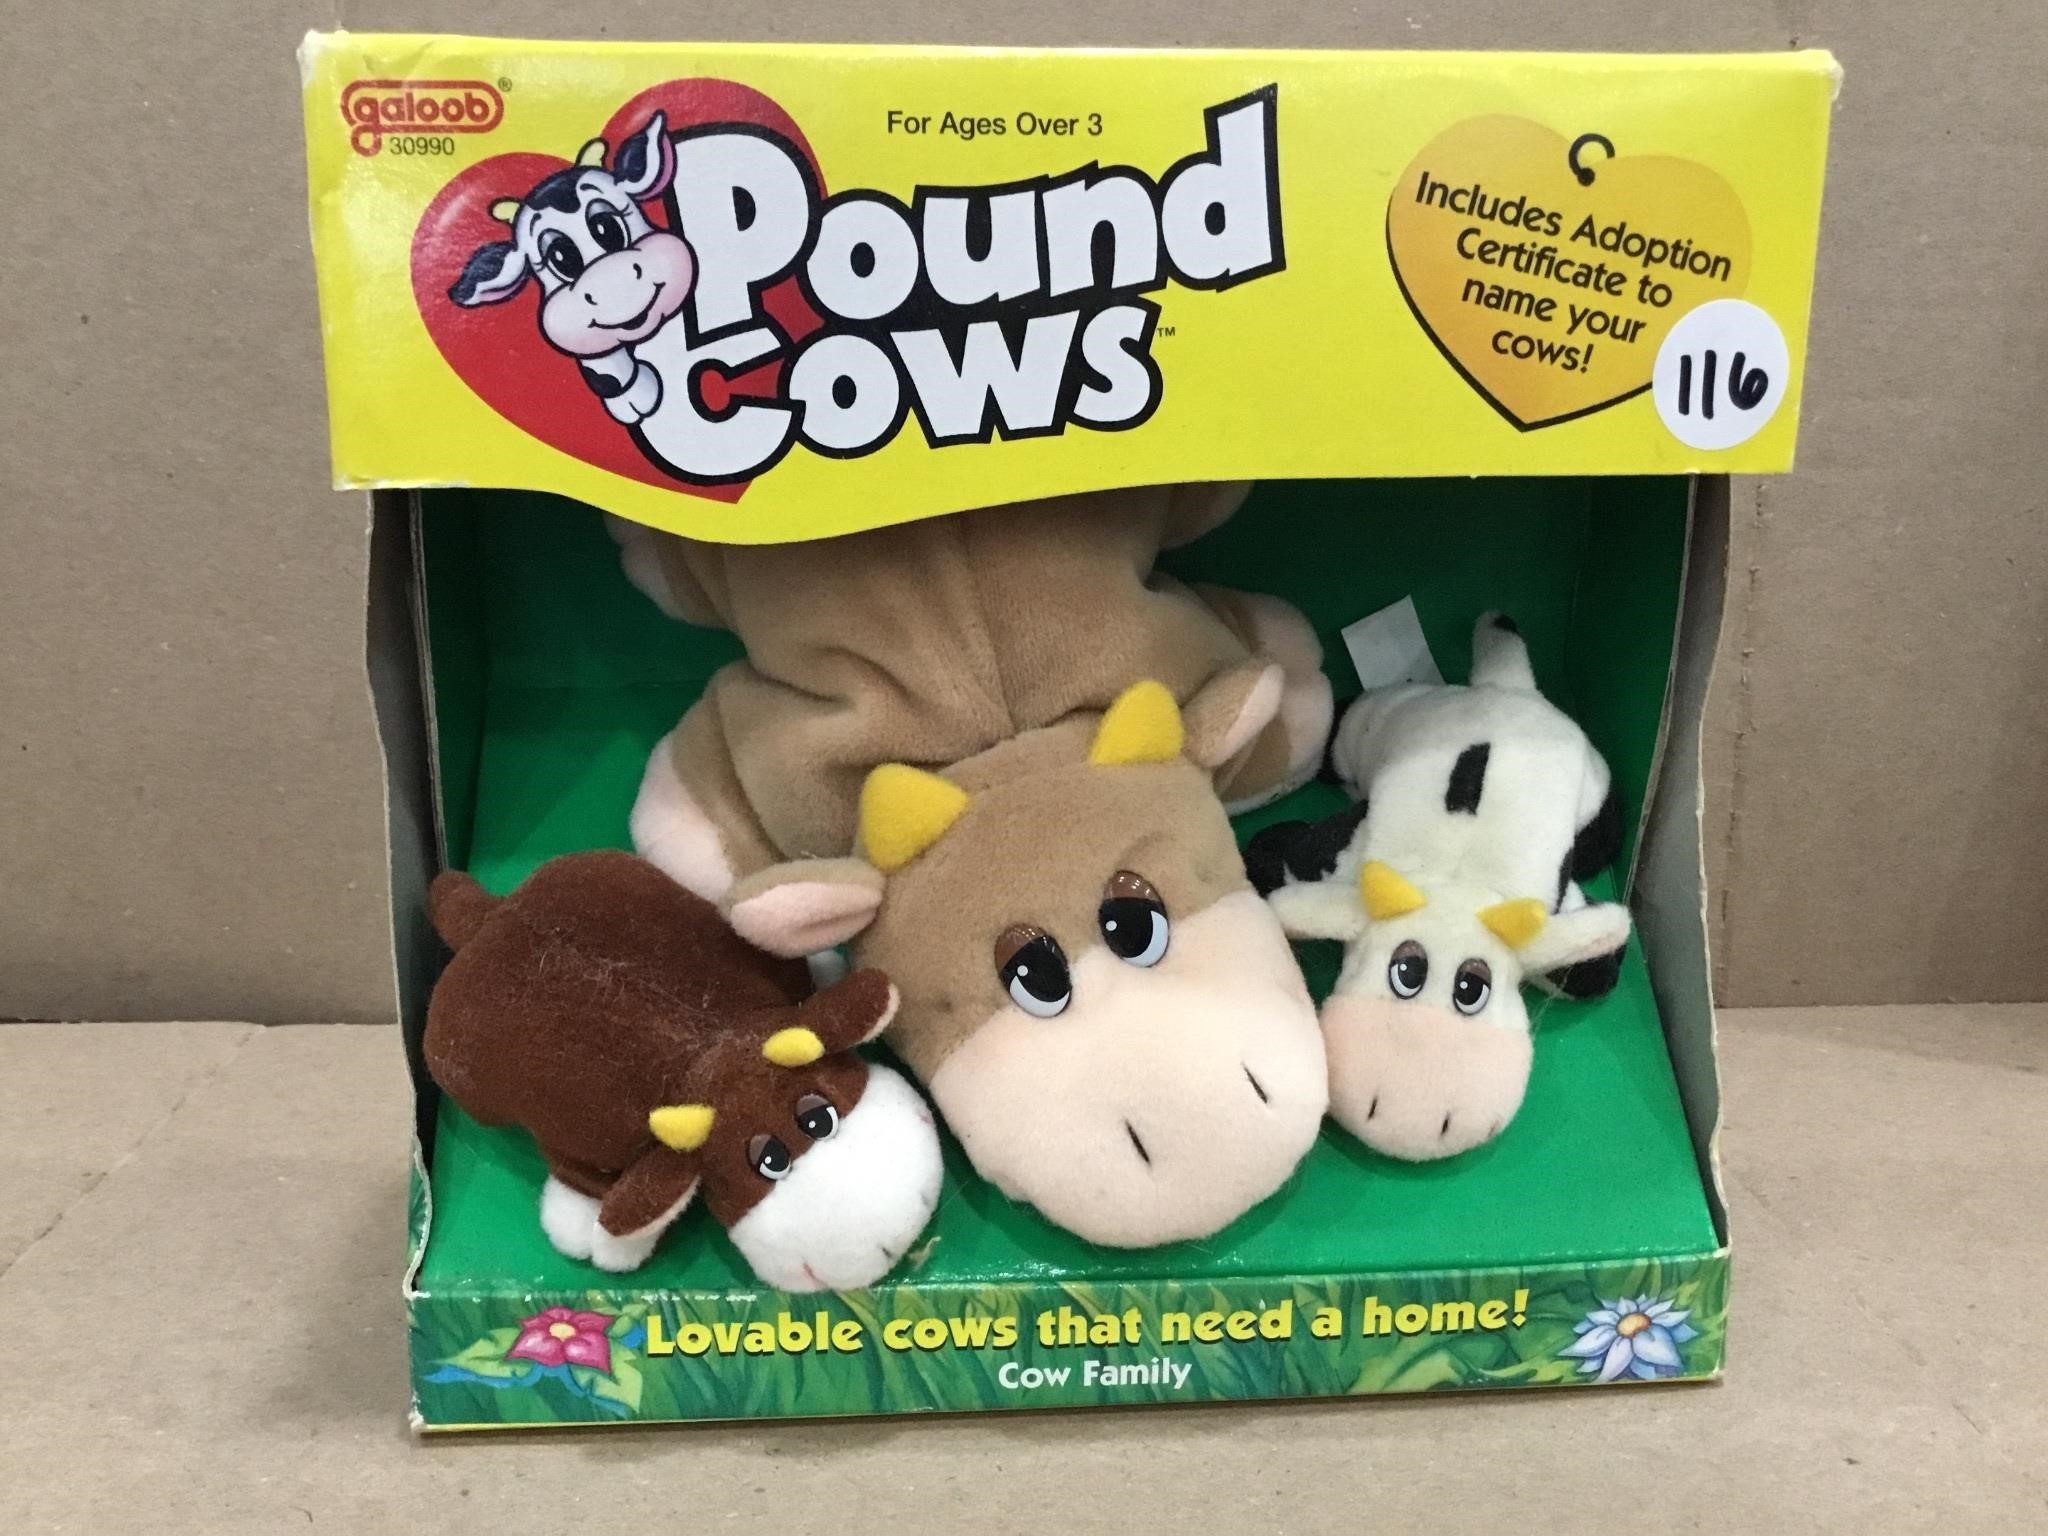 1998 Pound Cows- Cow Family